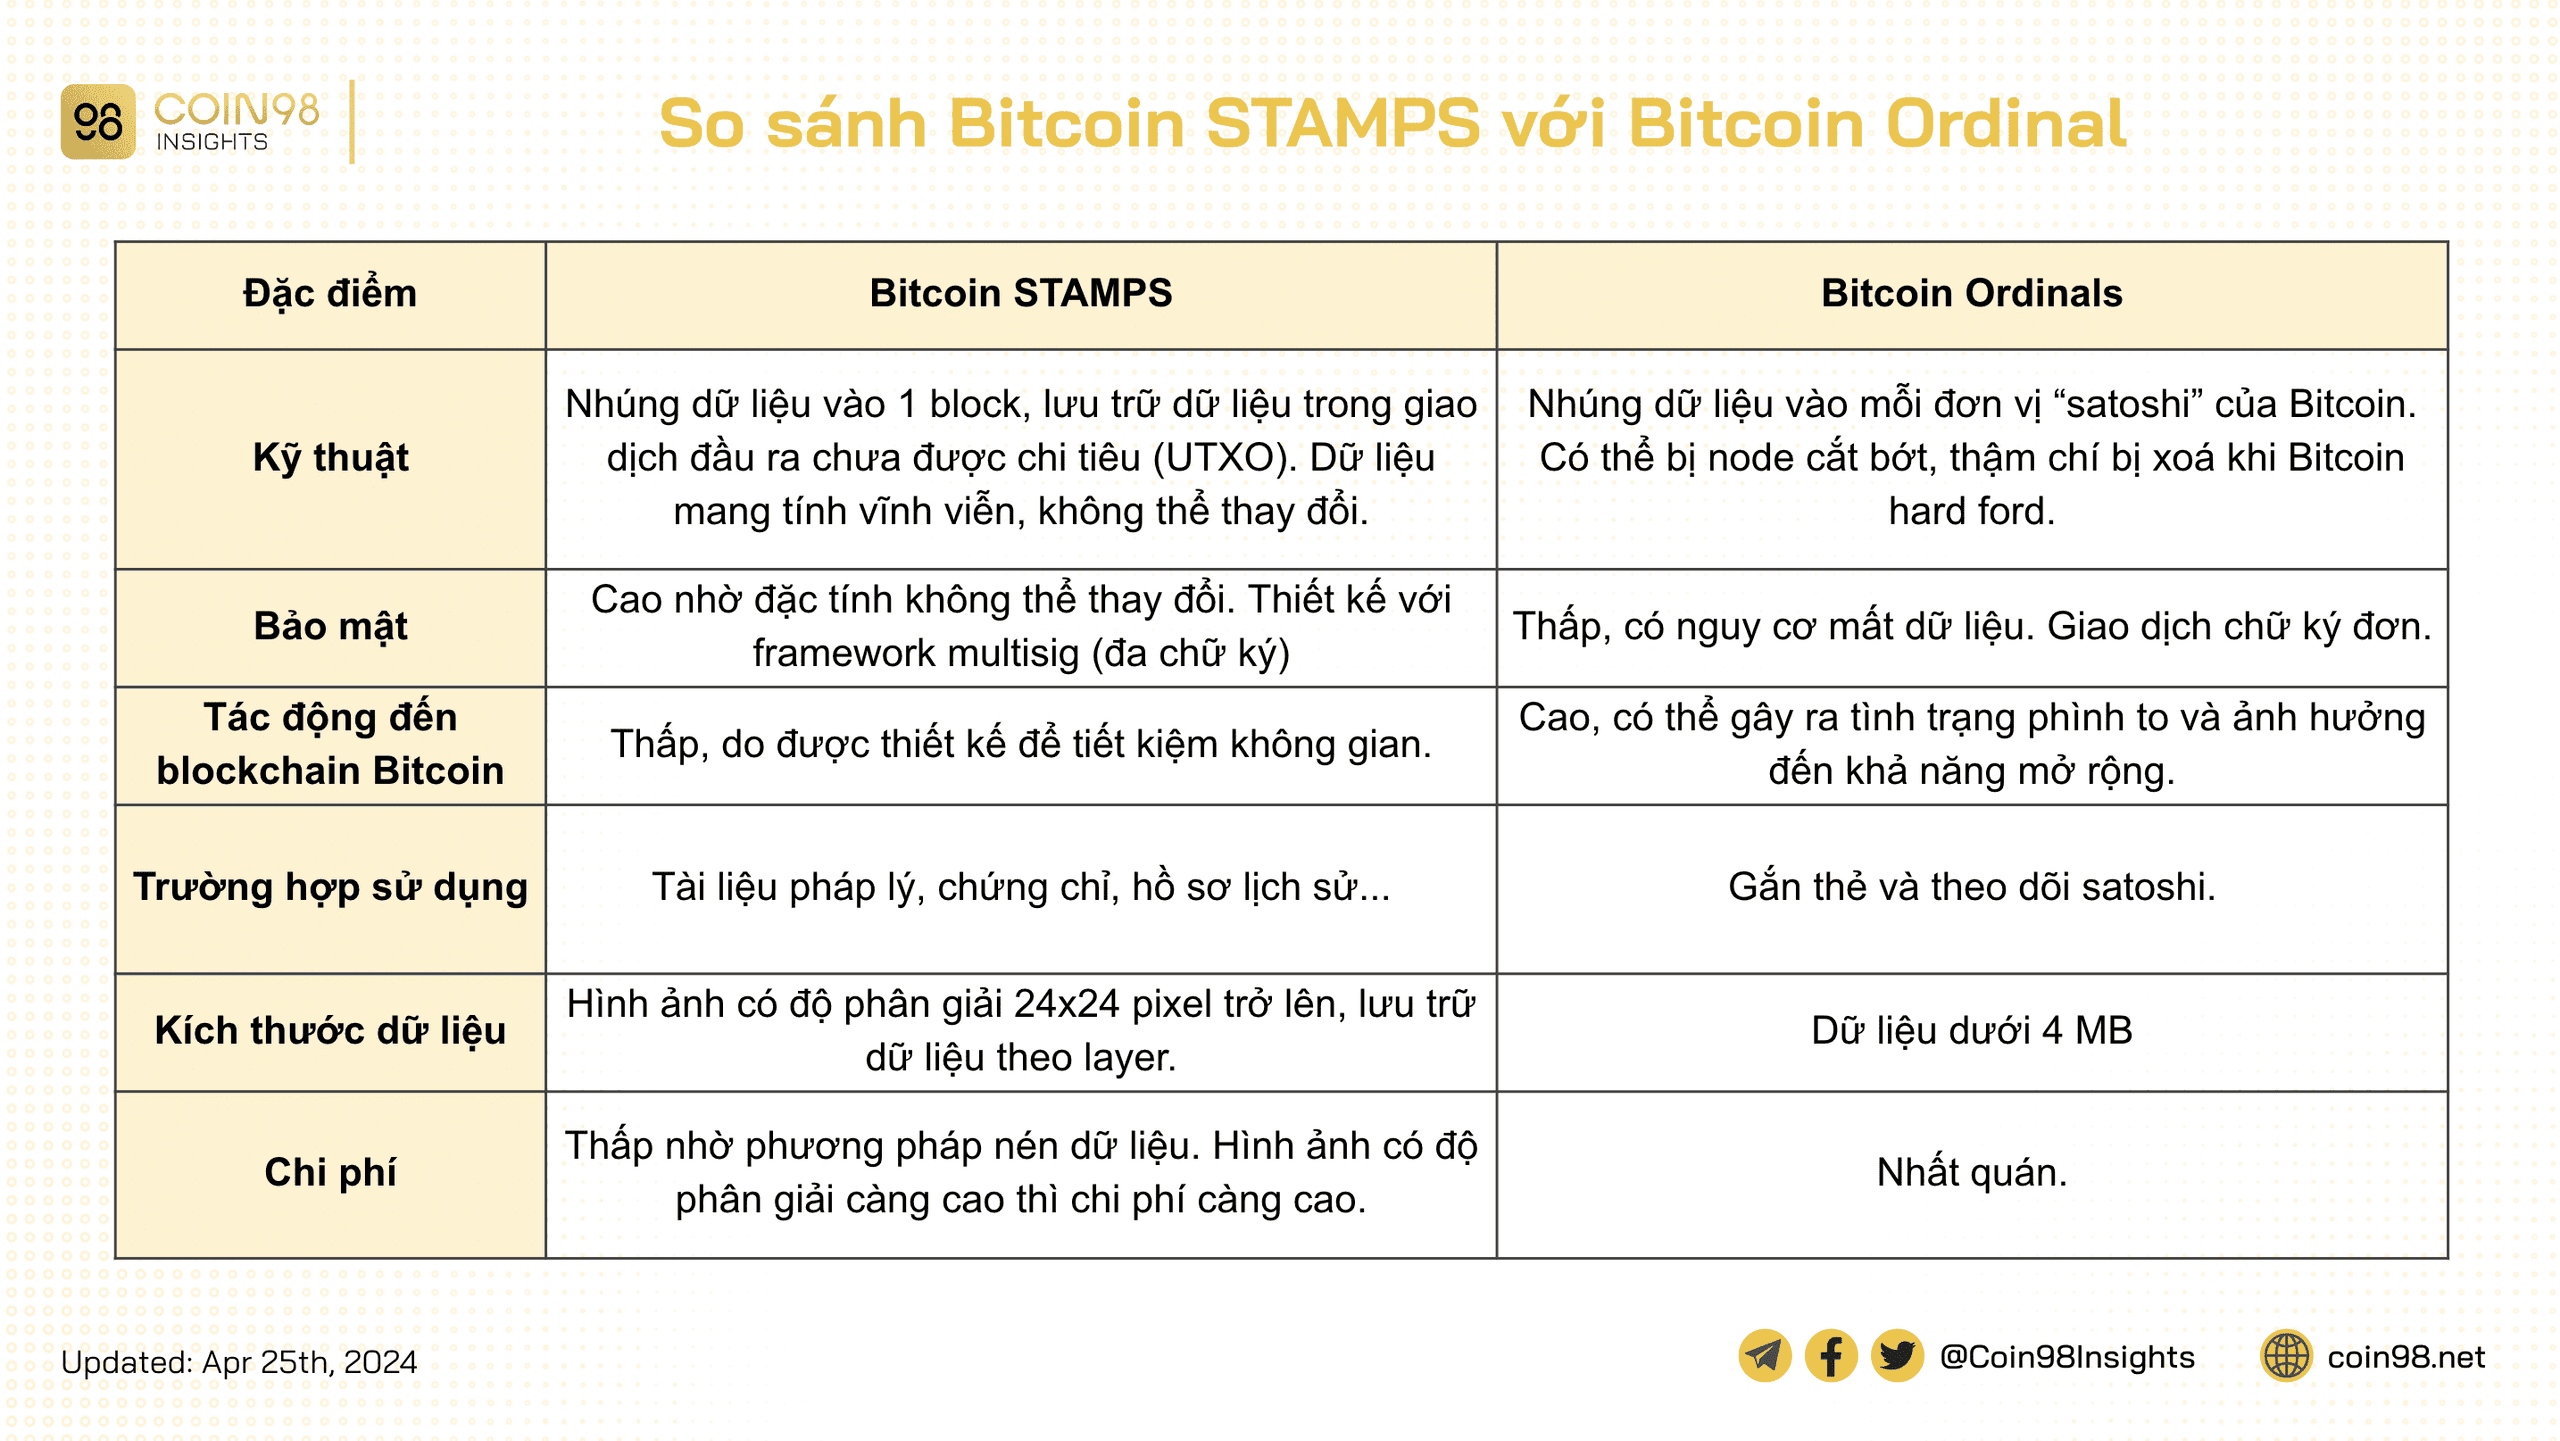 so sánh bitcoin stamps và bitcoin ordinals